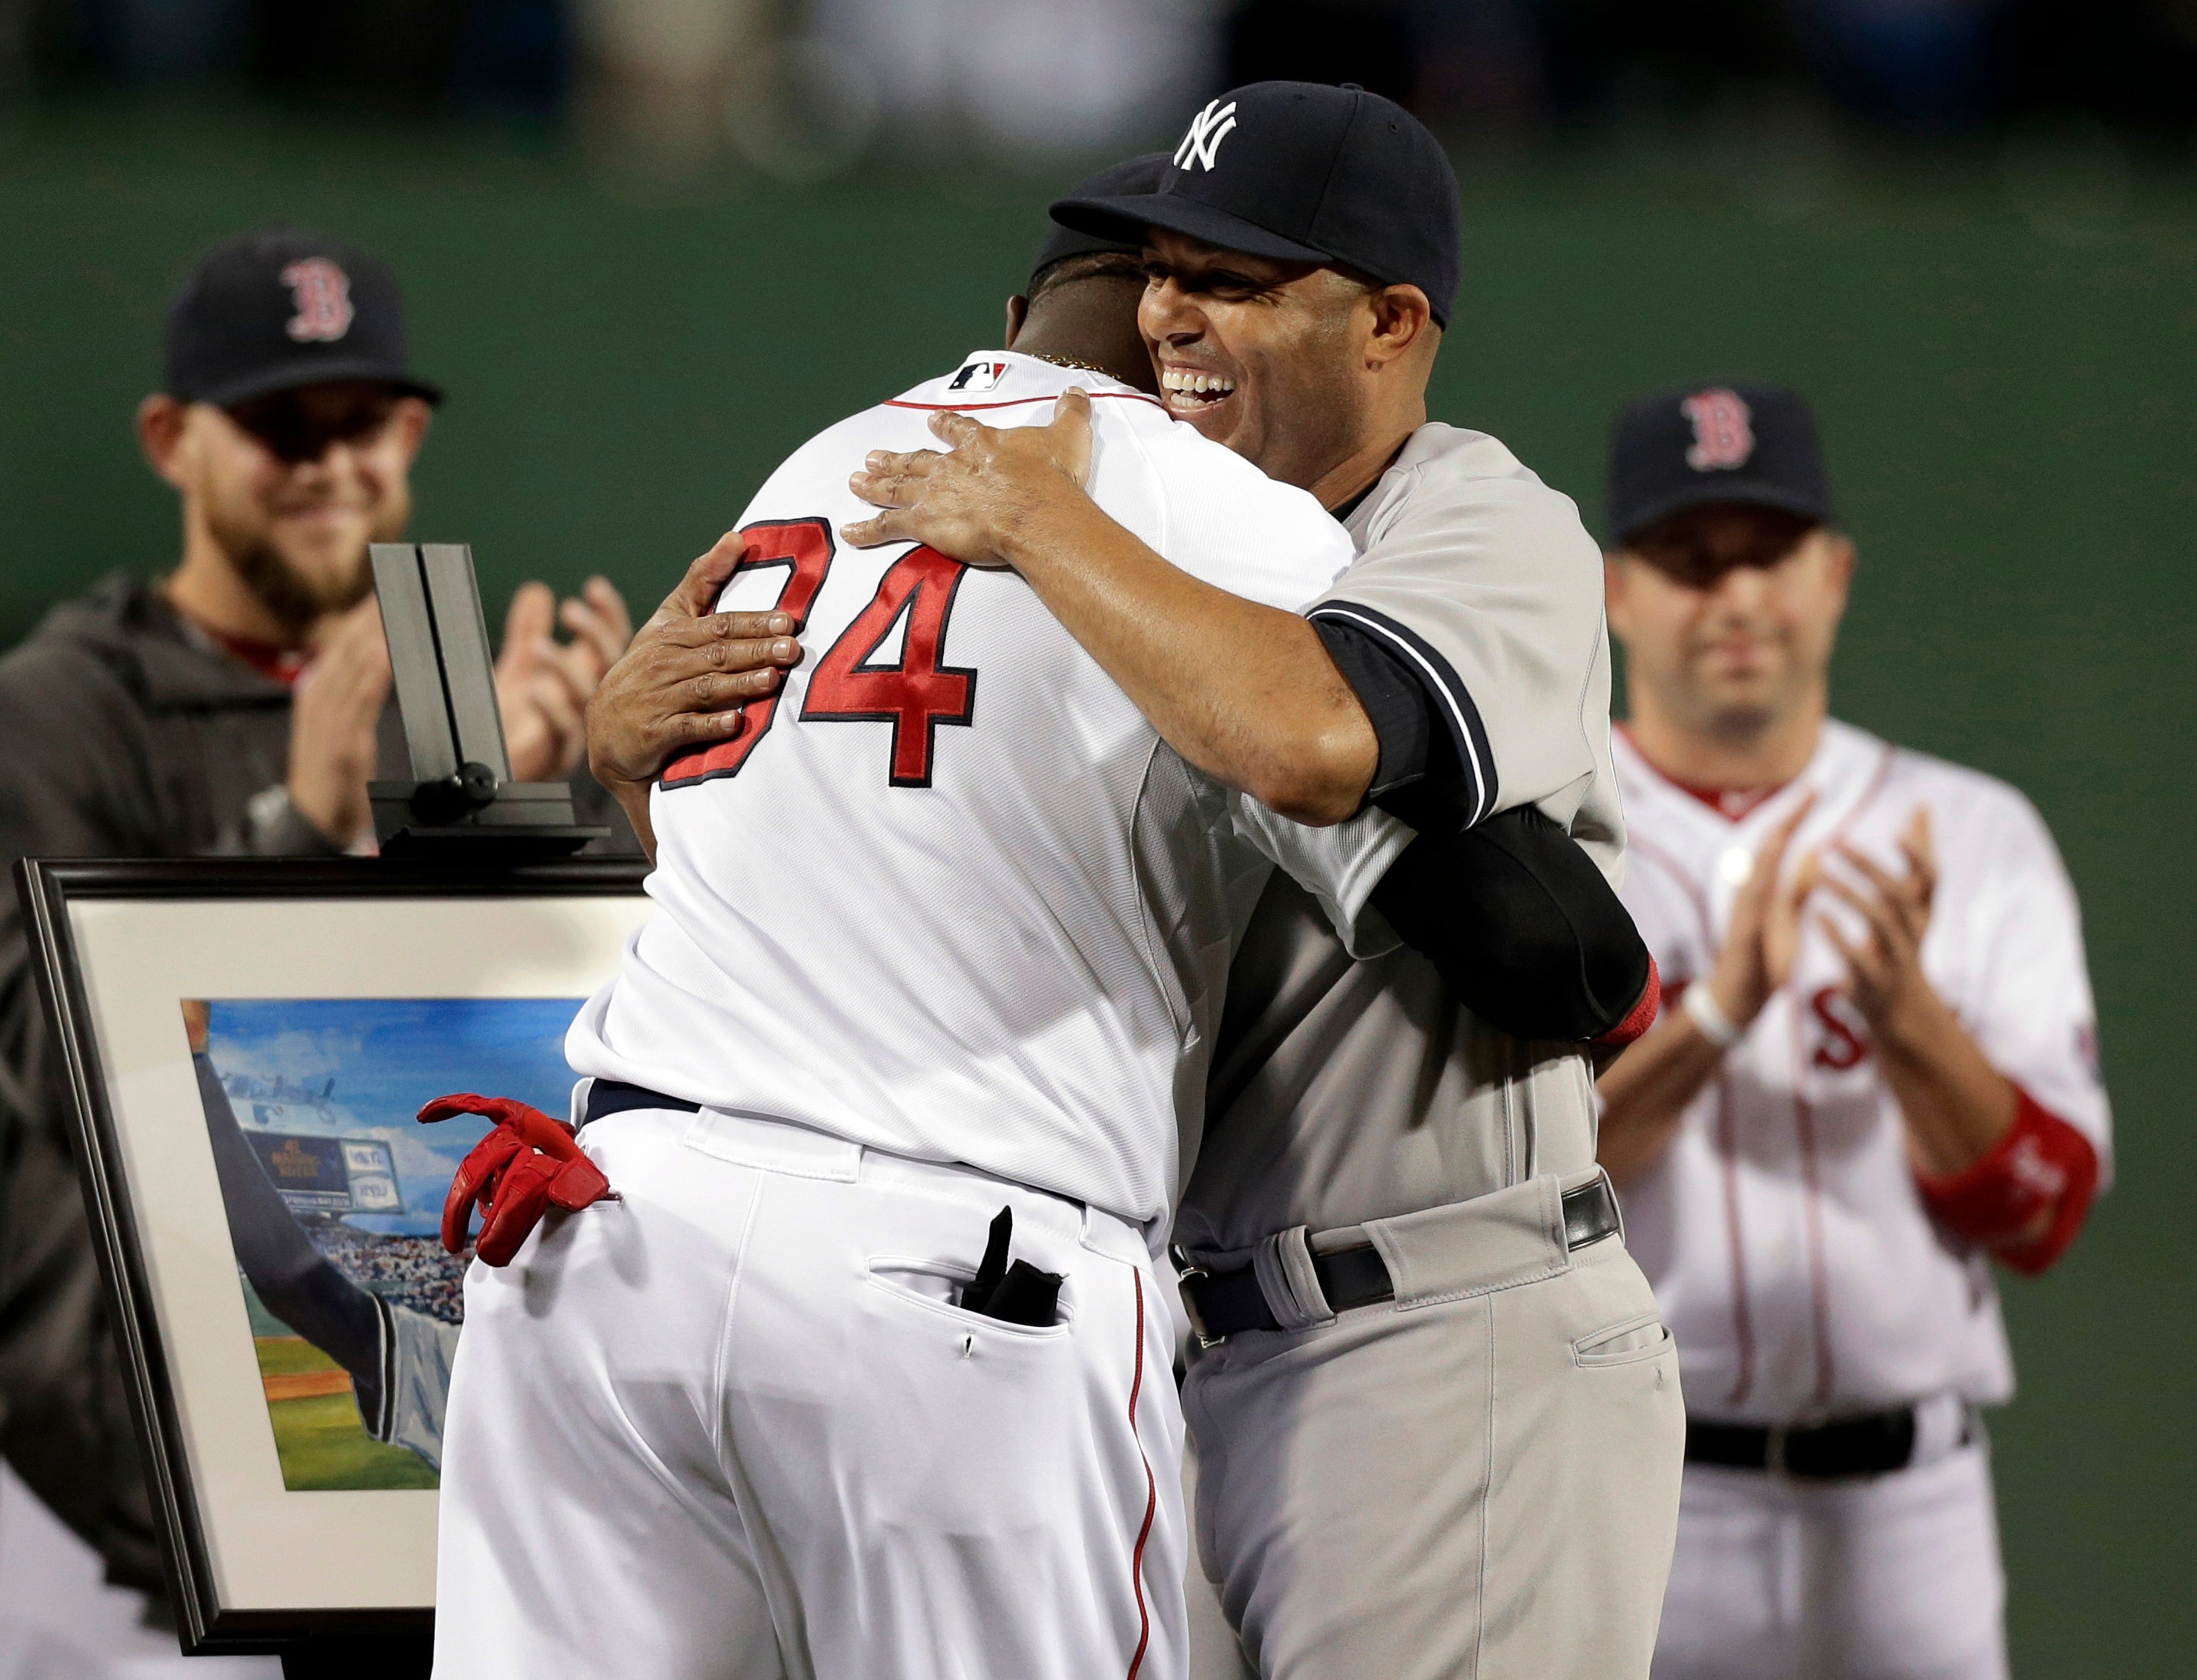 Yankees honor David Ortiz before his final game in N.Y. - The Boston Globe